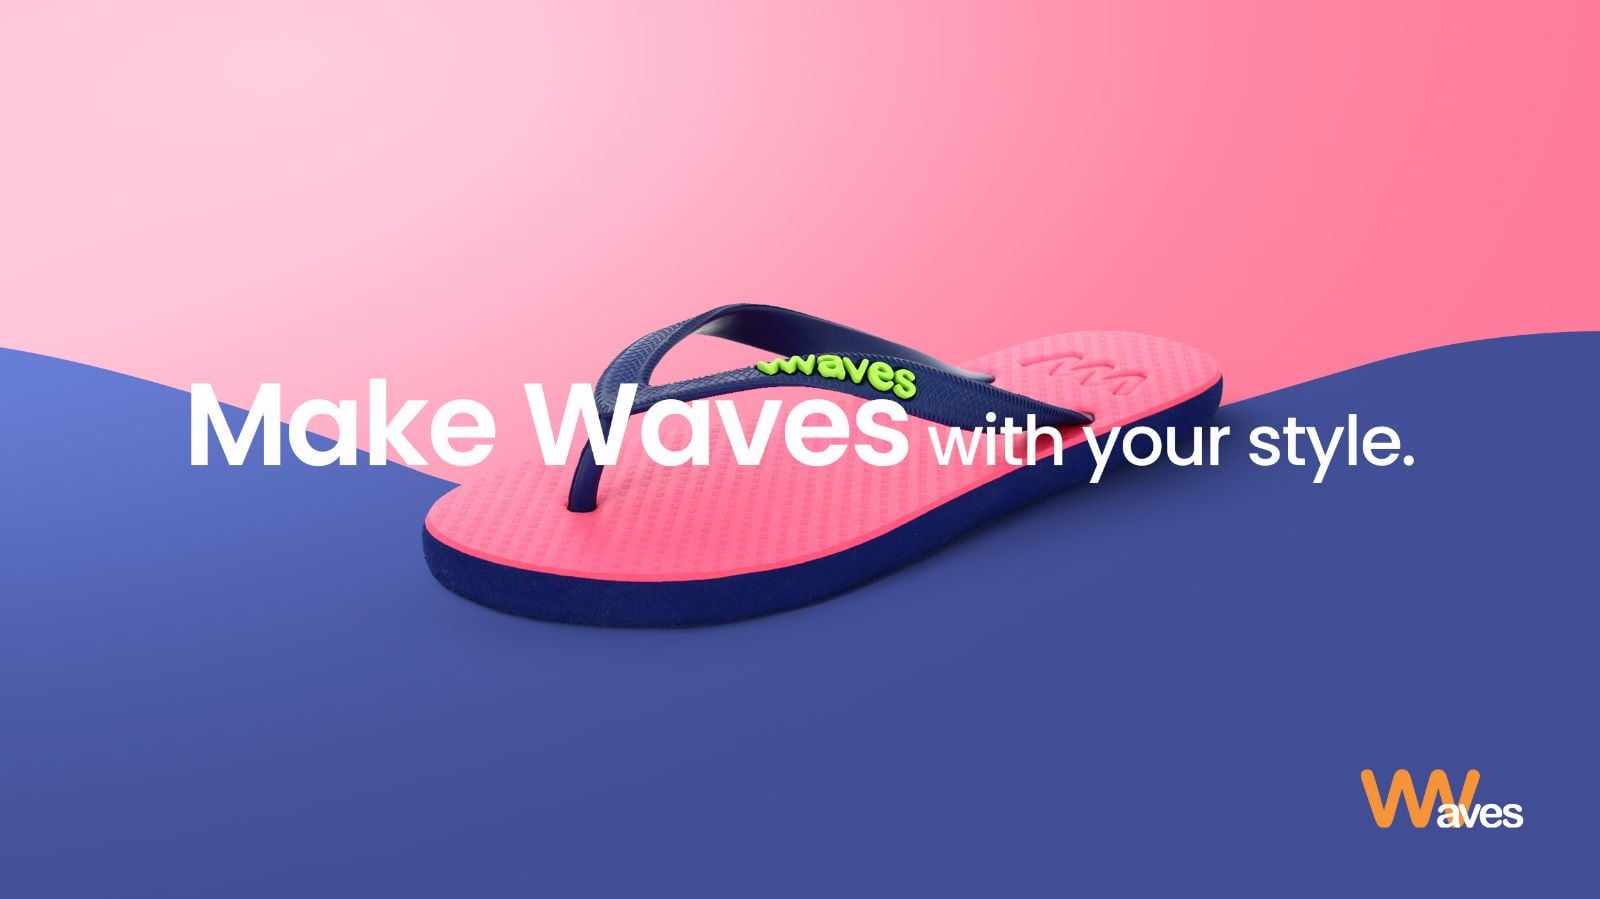 Waves Flip Flops for Women - 100% Natural Rubber